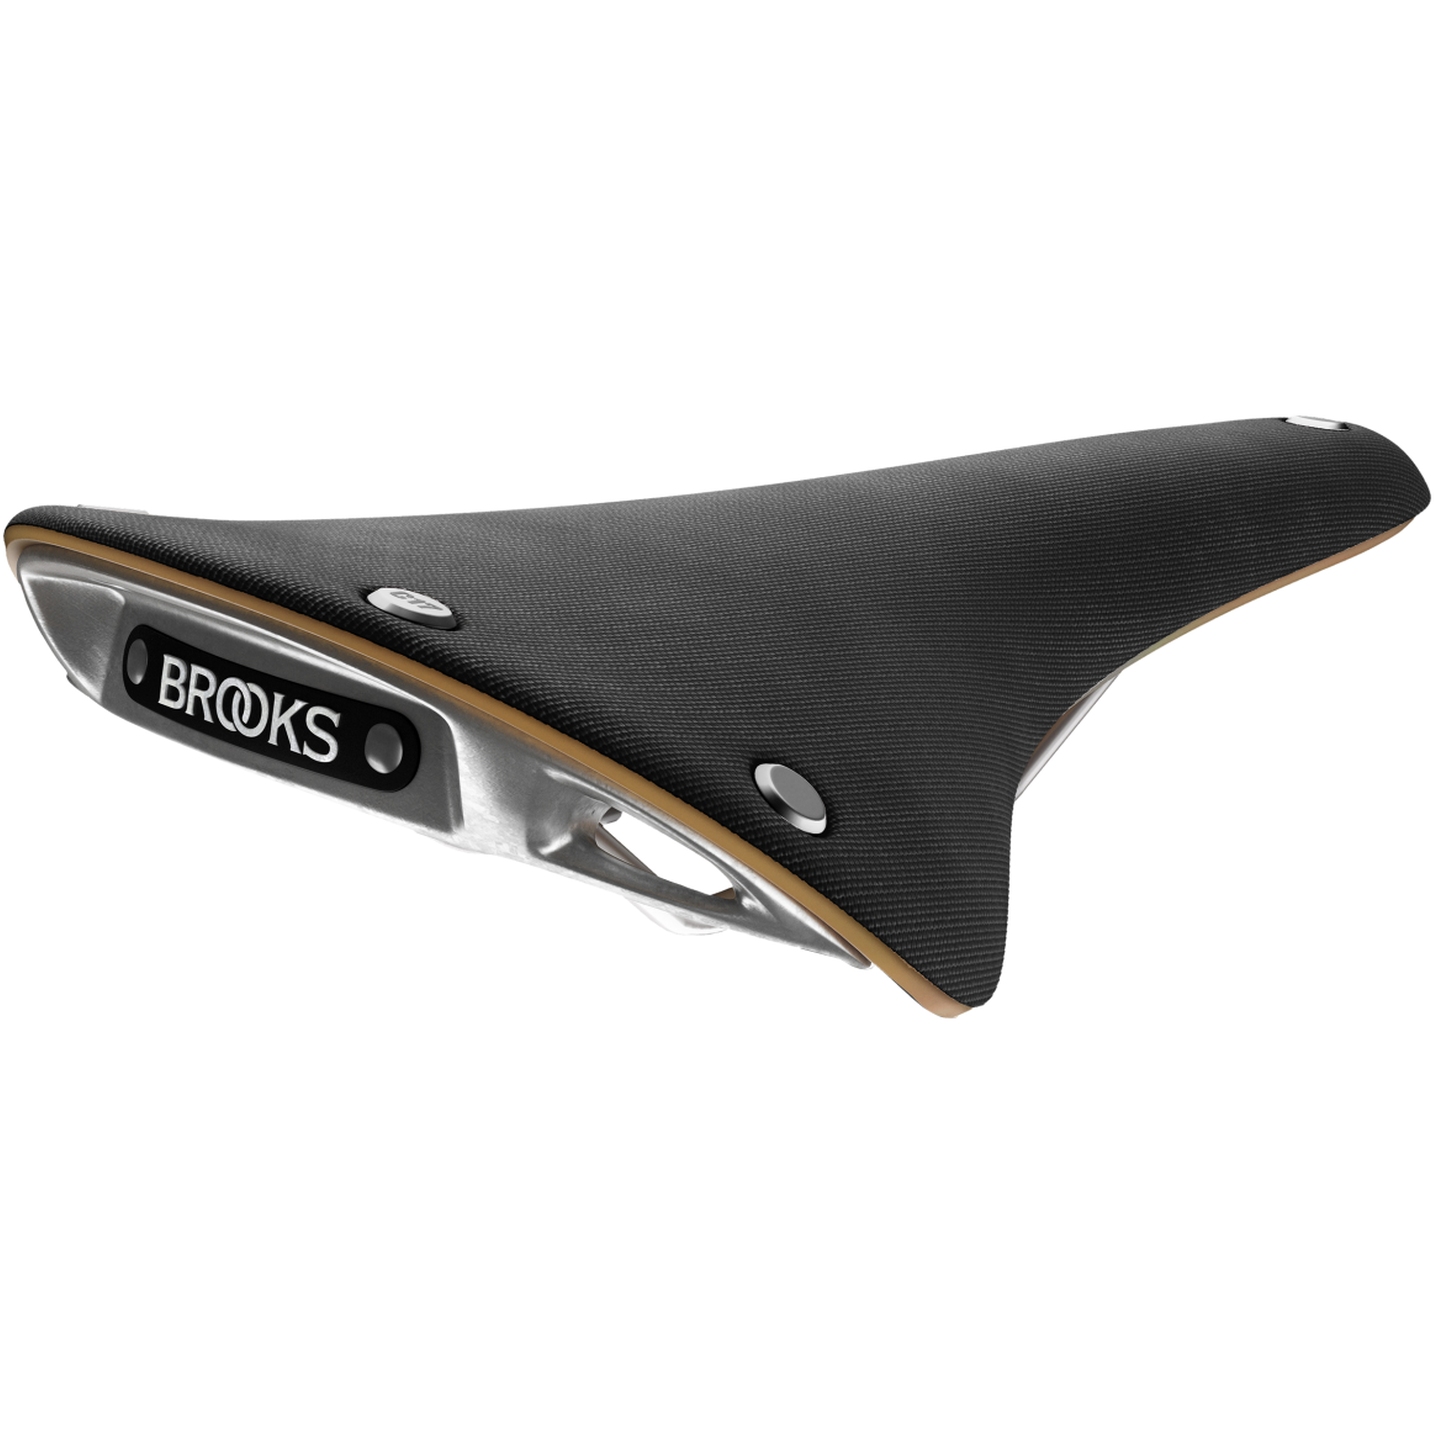 Productfoto van Brooks Cambium C17 Special Saddle - black/natural rubber